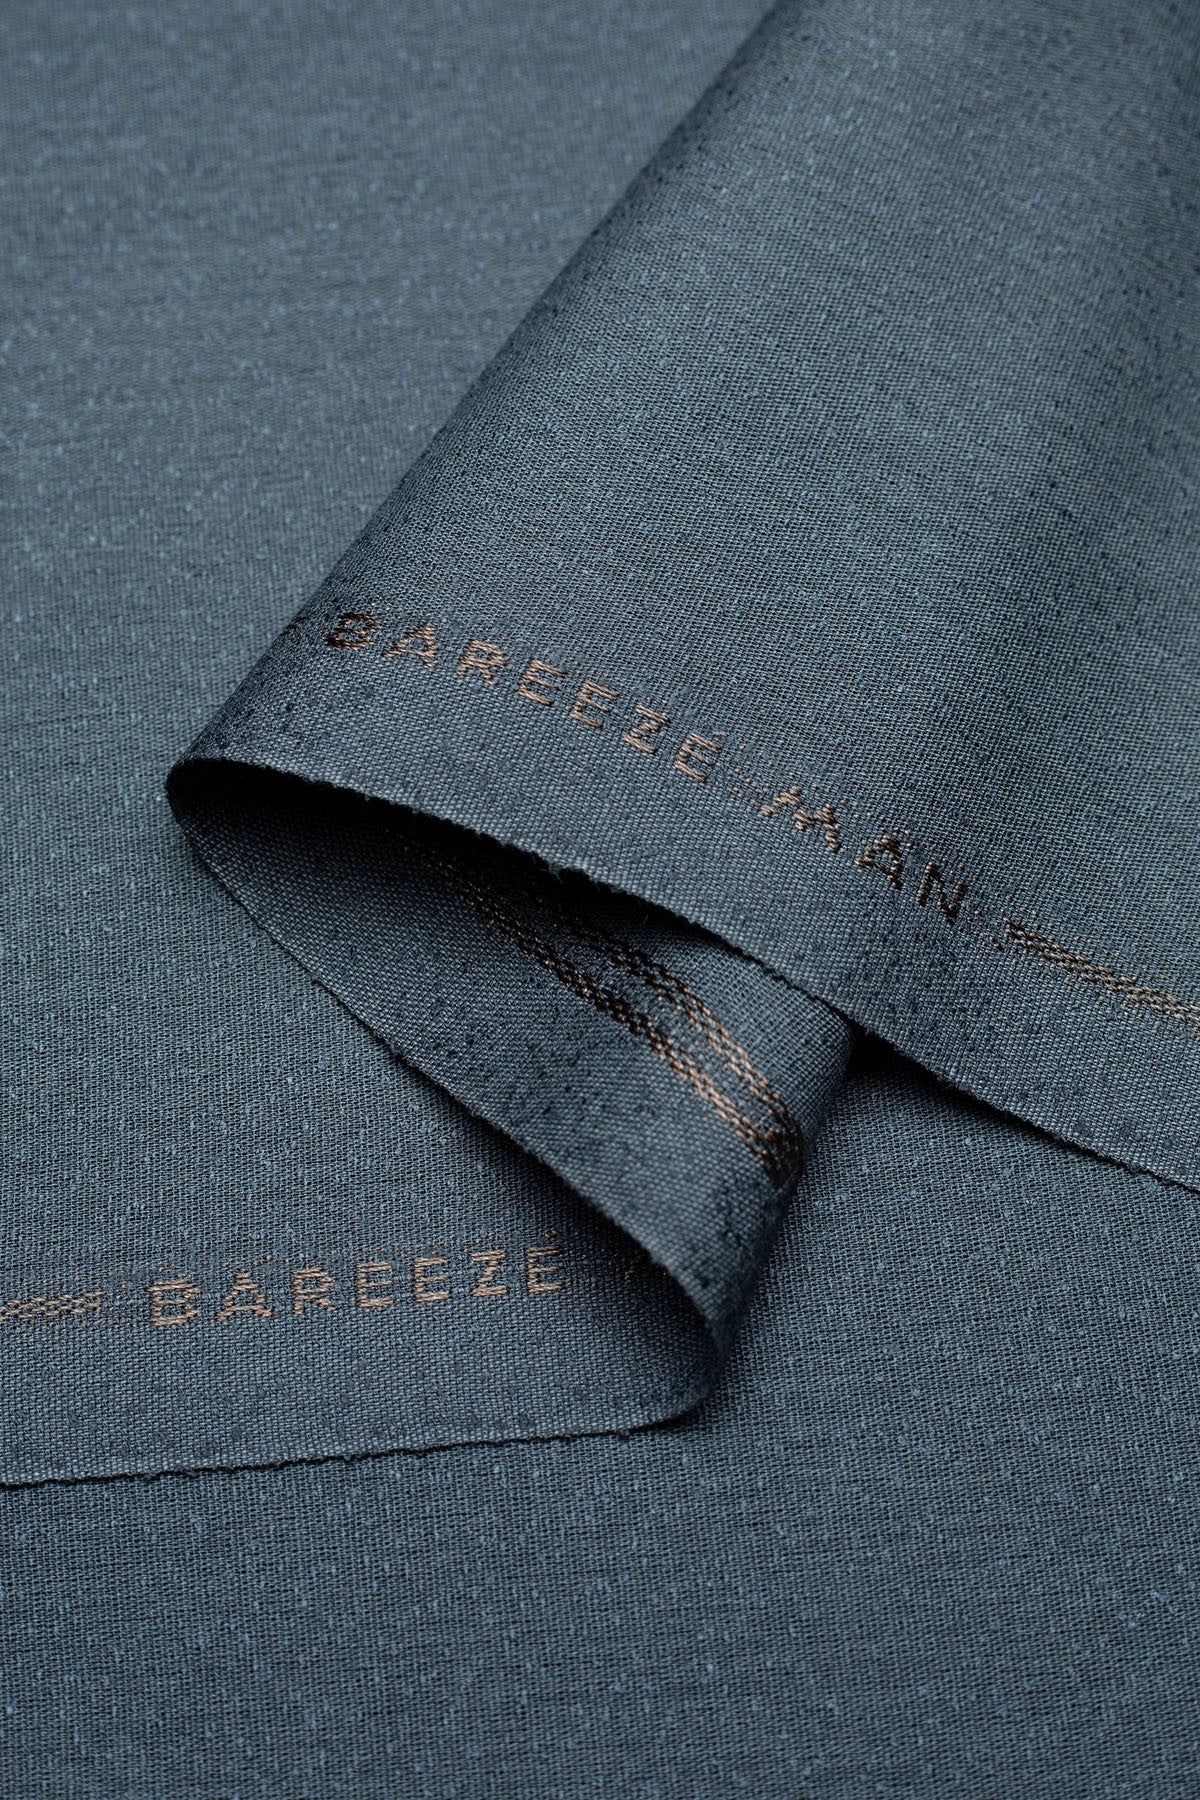 Bareeze Man Lawn Karandi Unstitched Fabric for Summer - Grey